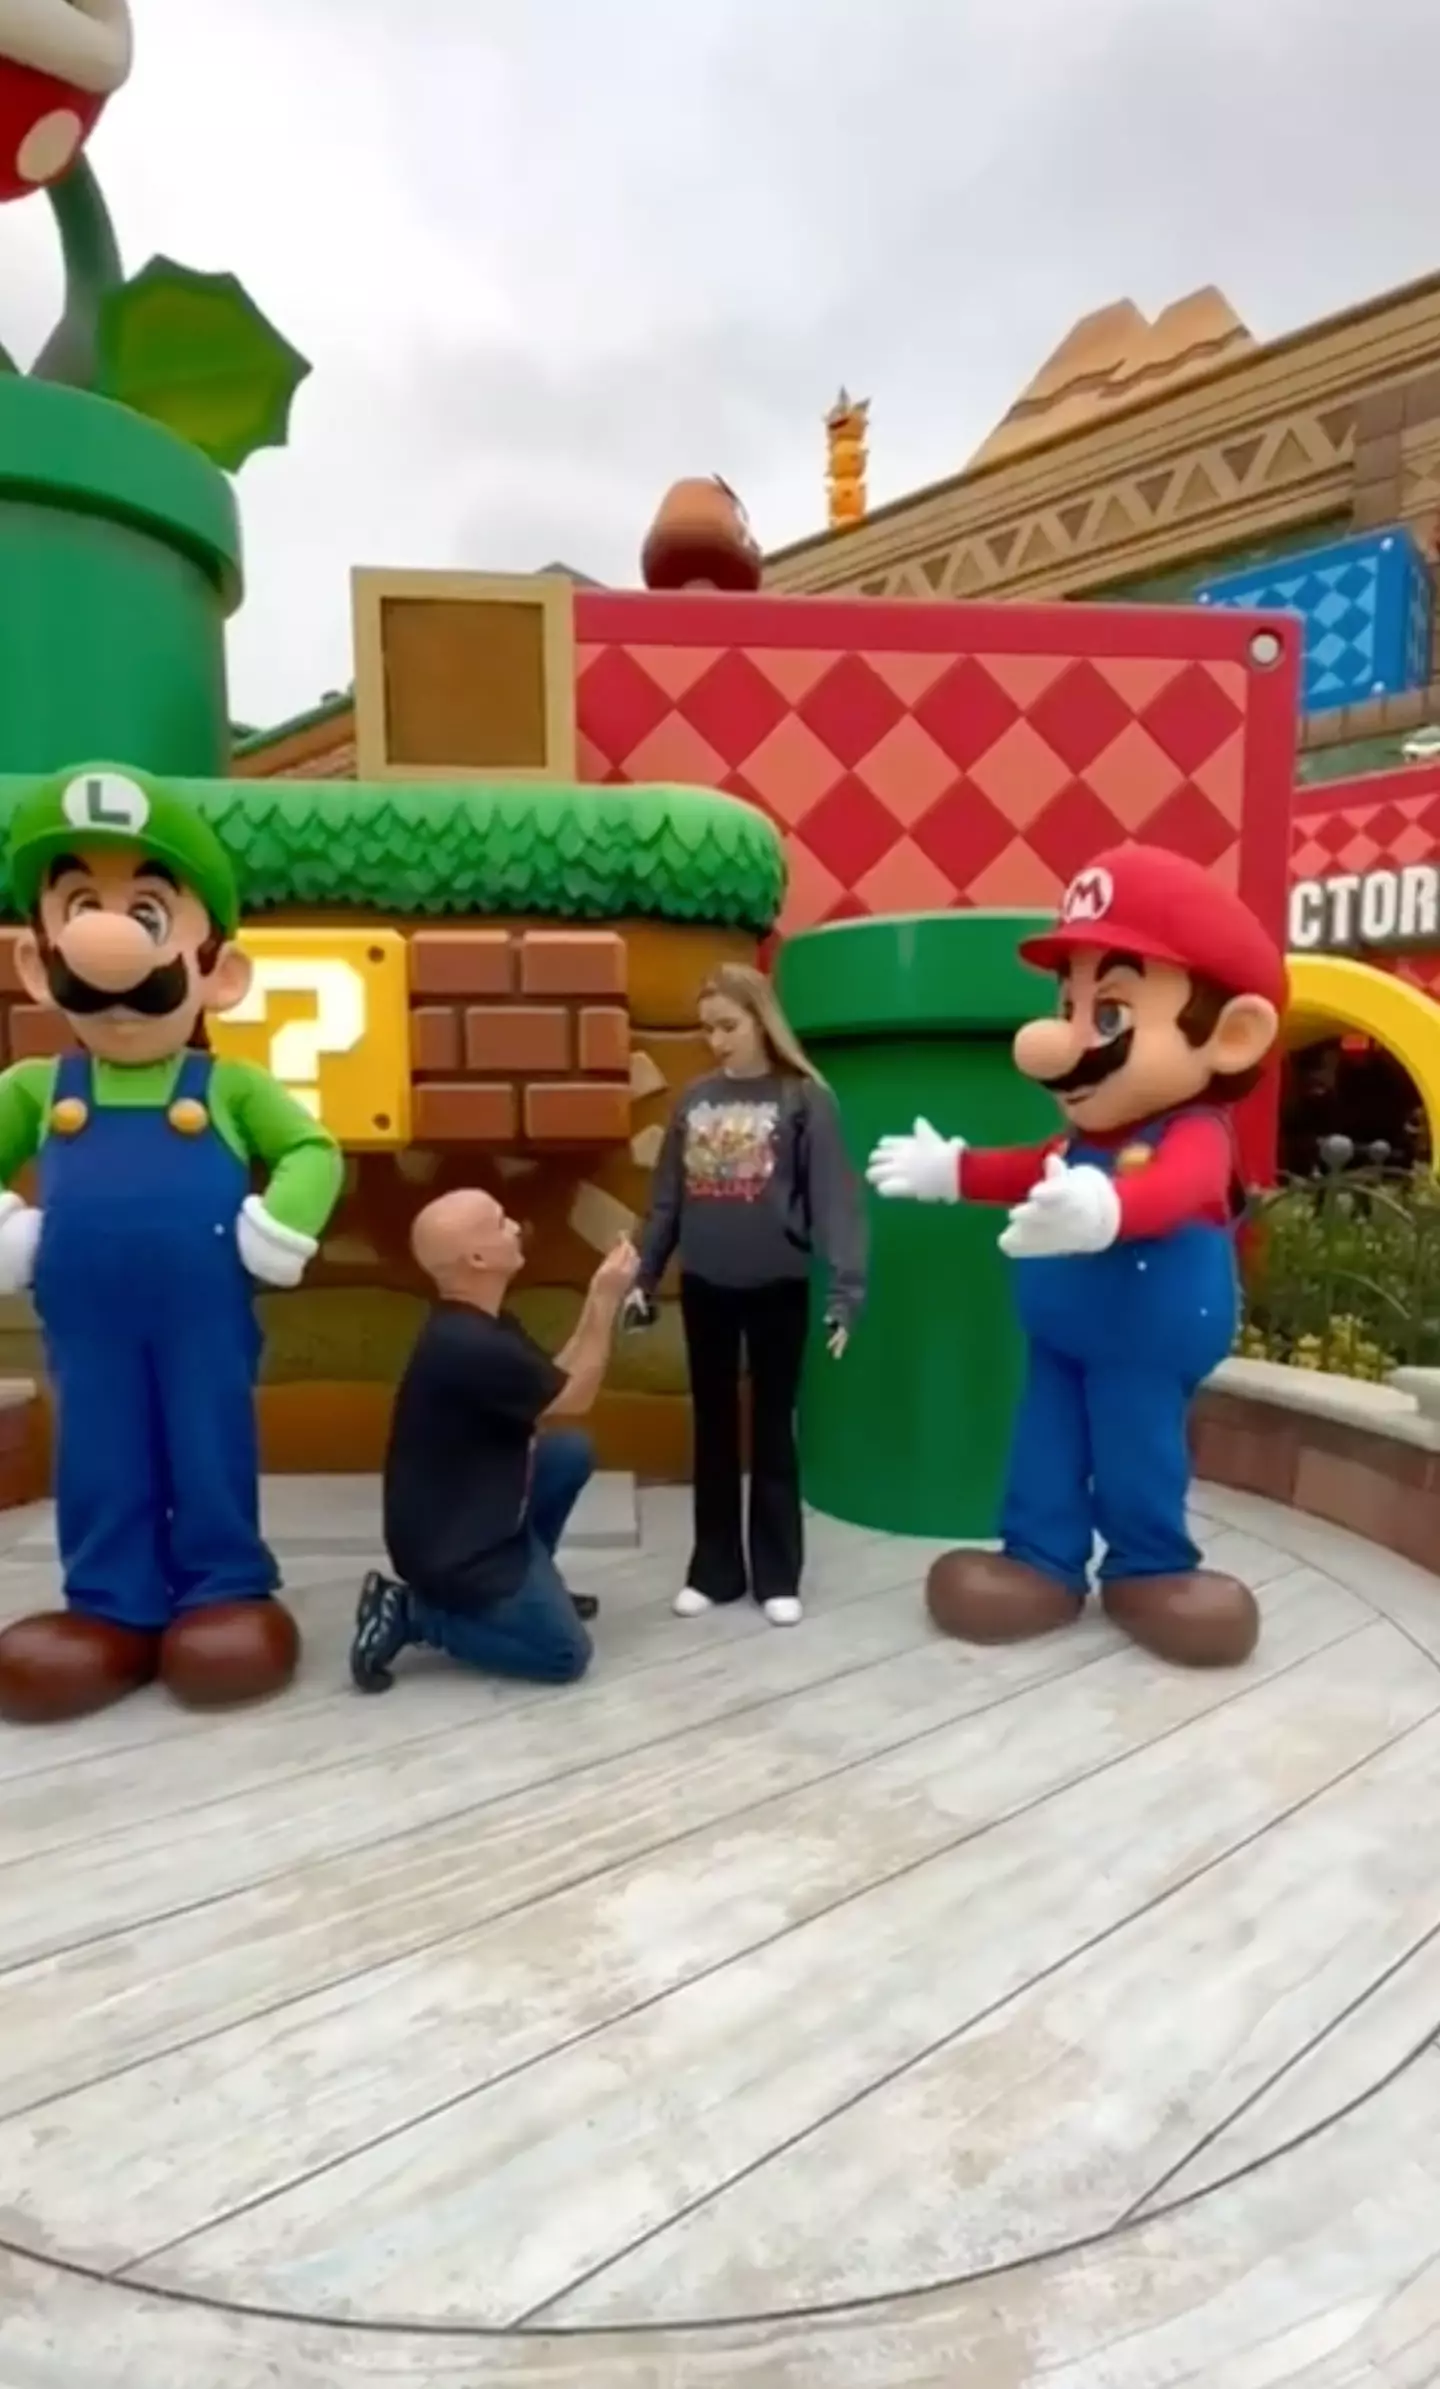 Luigi seemed less than impressed by the prosal.